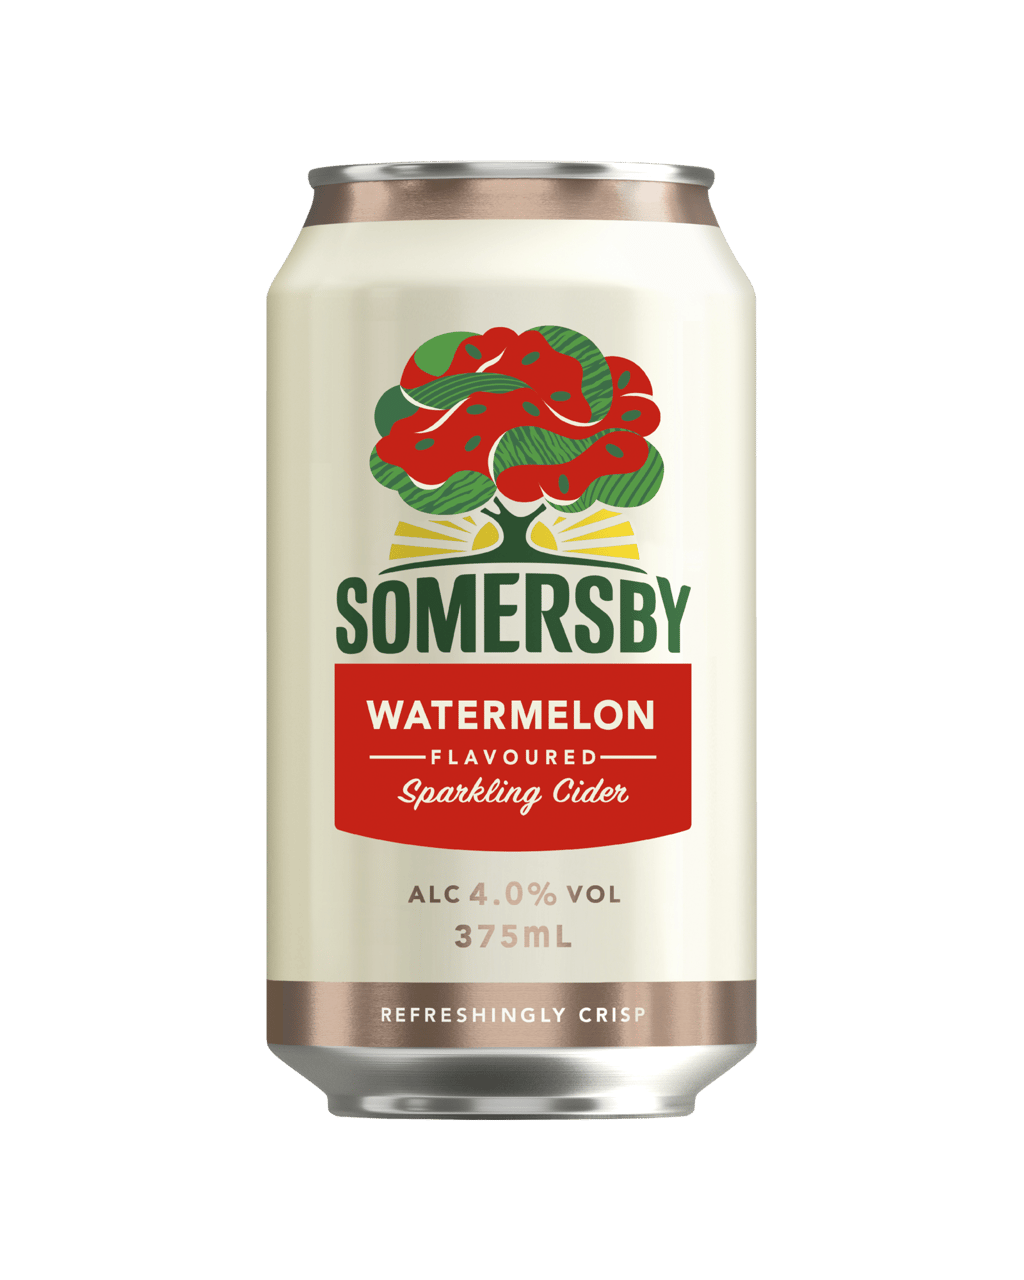 Somersby watermelon